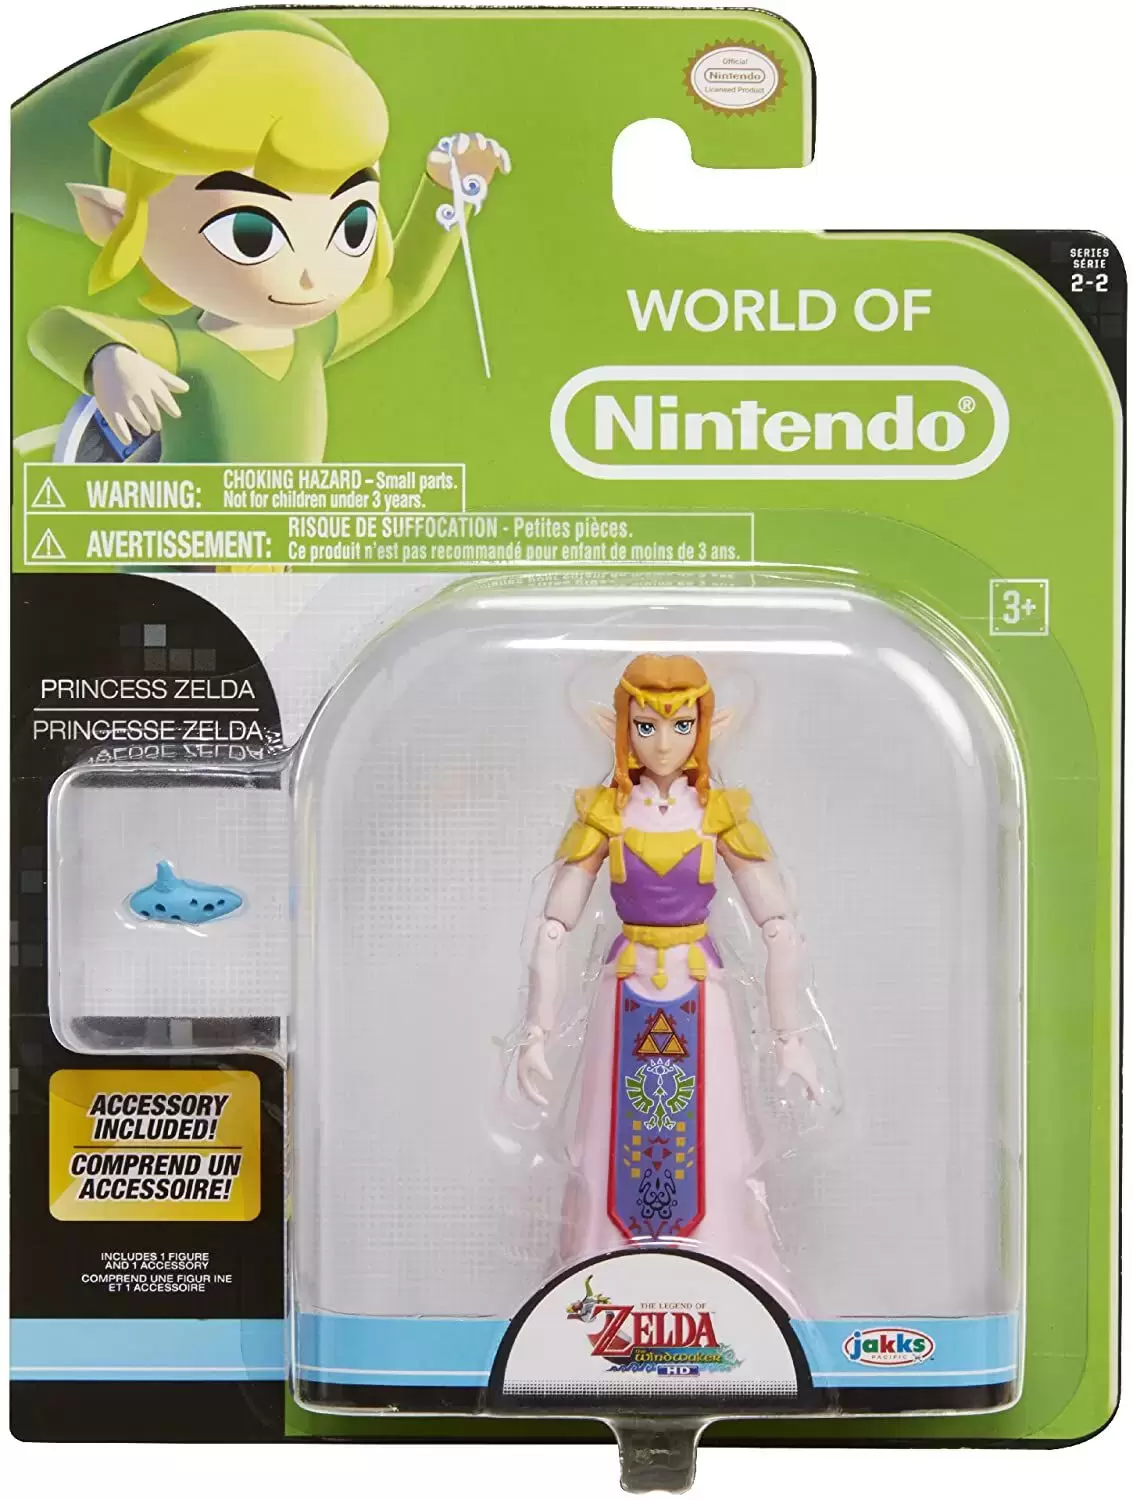 World of Nintendo - Princess Zelda with Ocarina